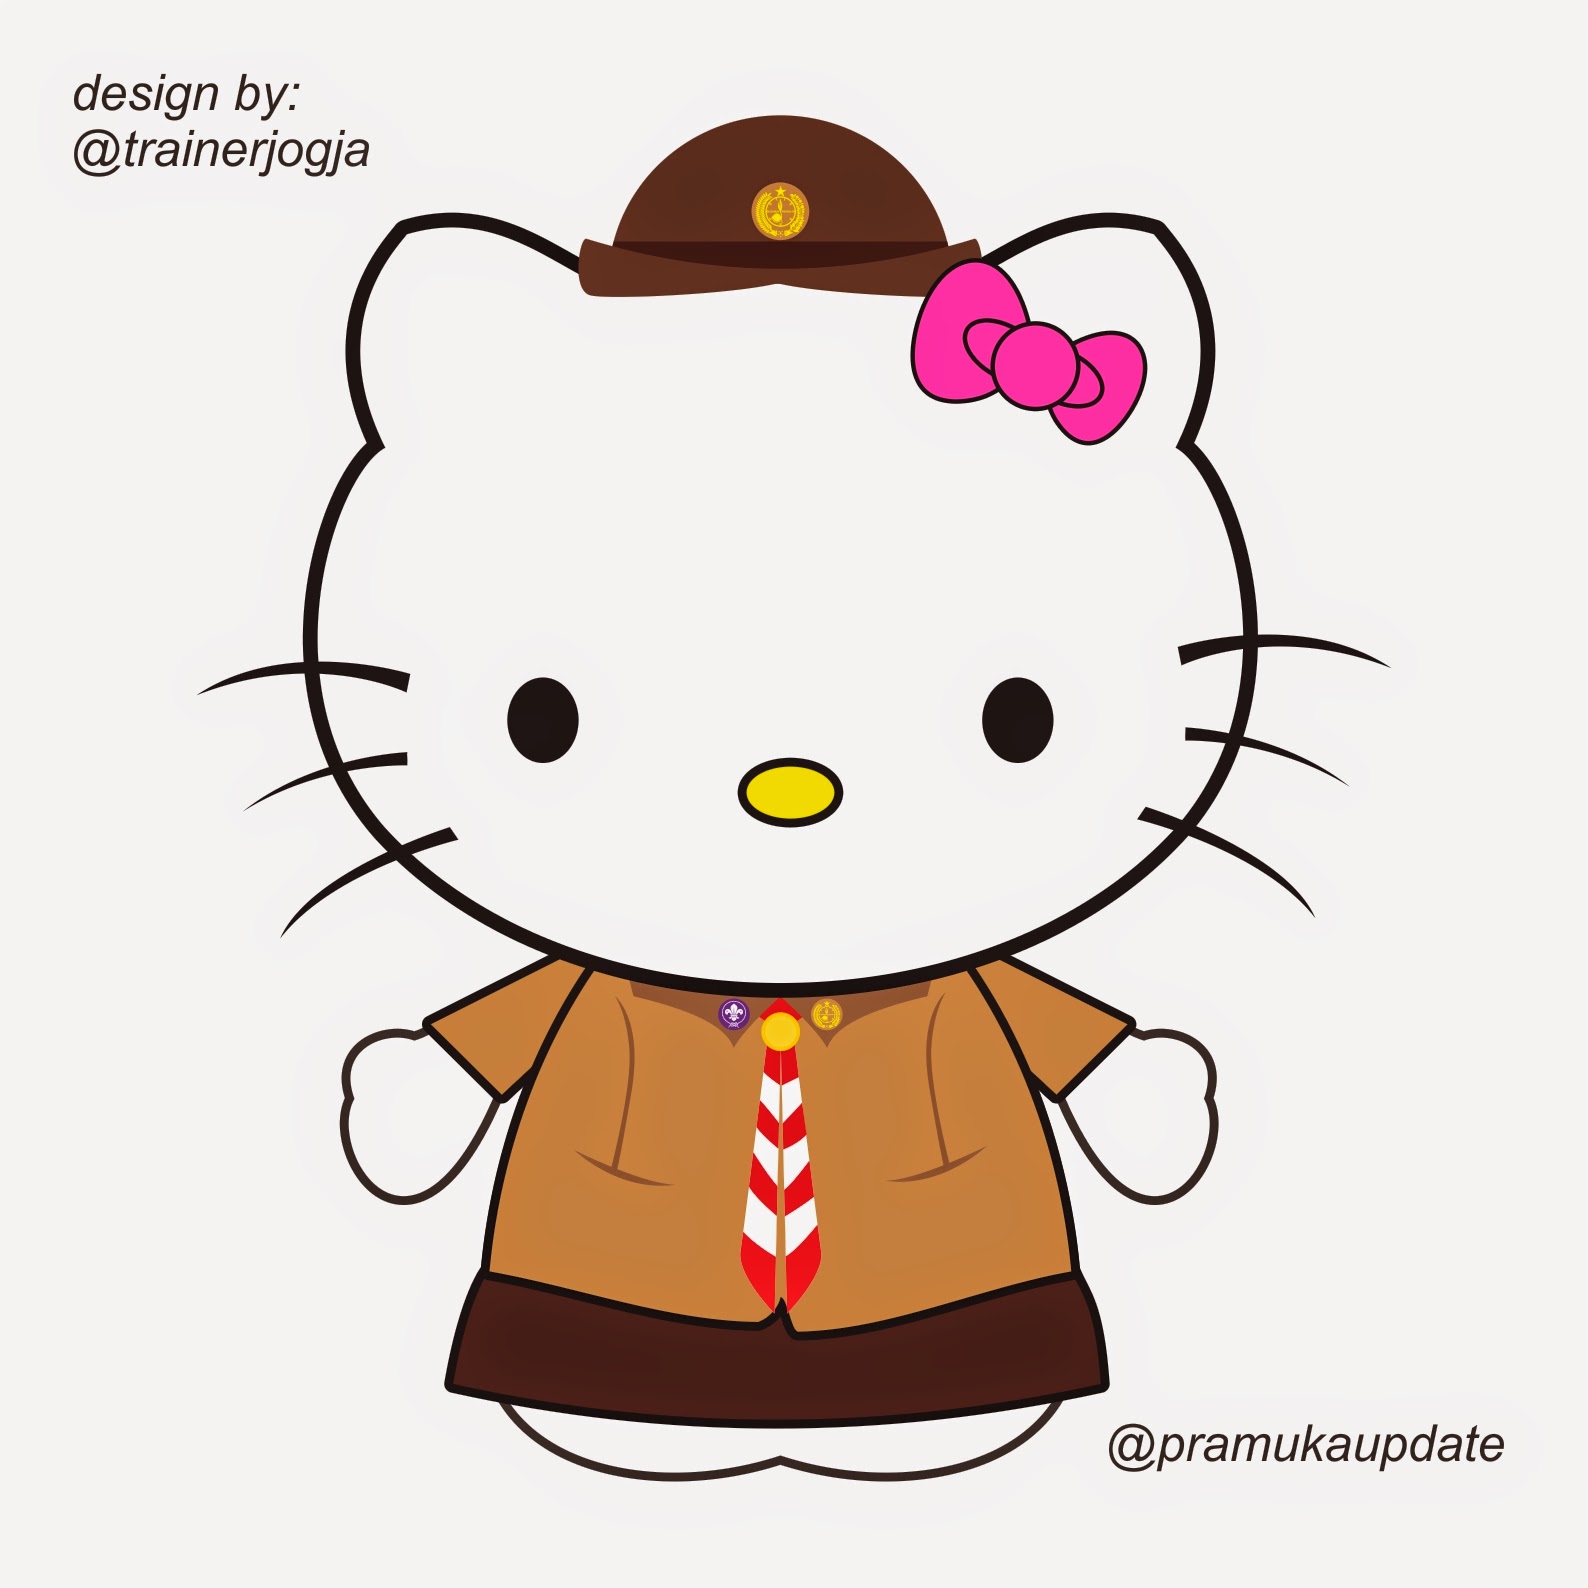 Foto Animasi Dp Bbm Hello Kitty Terbaru Display Picture Update